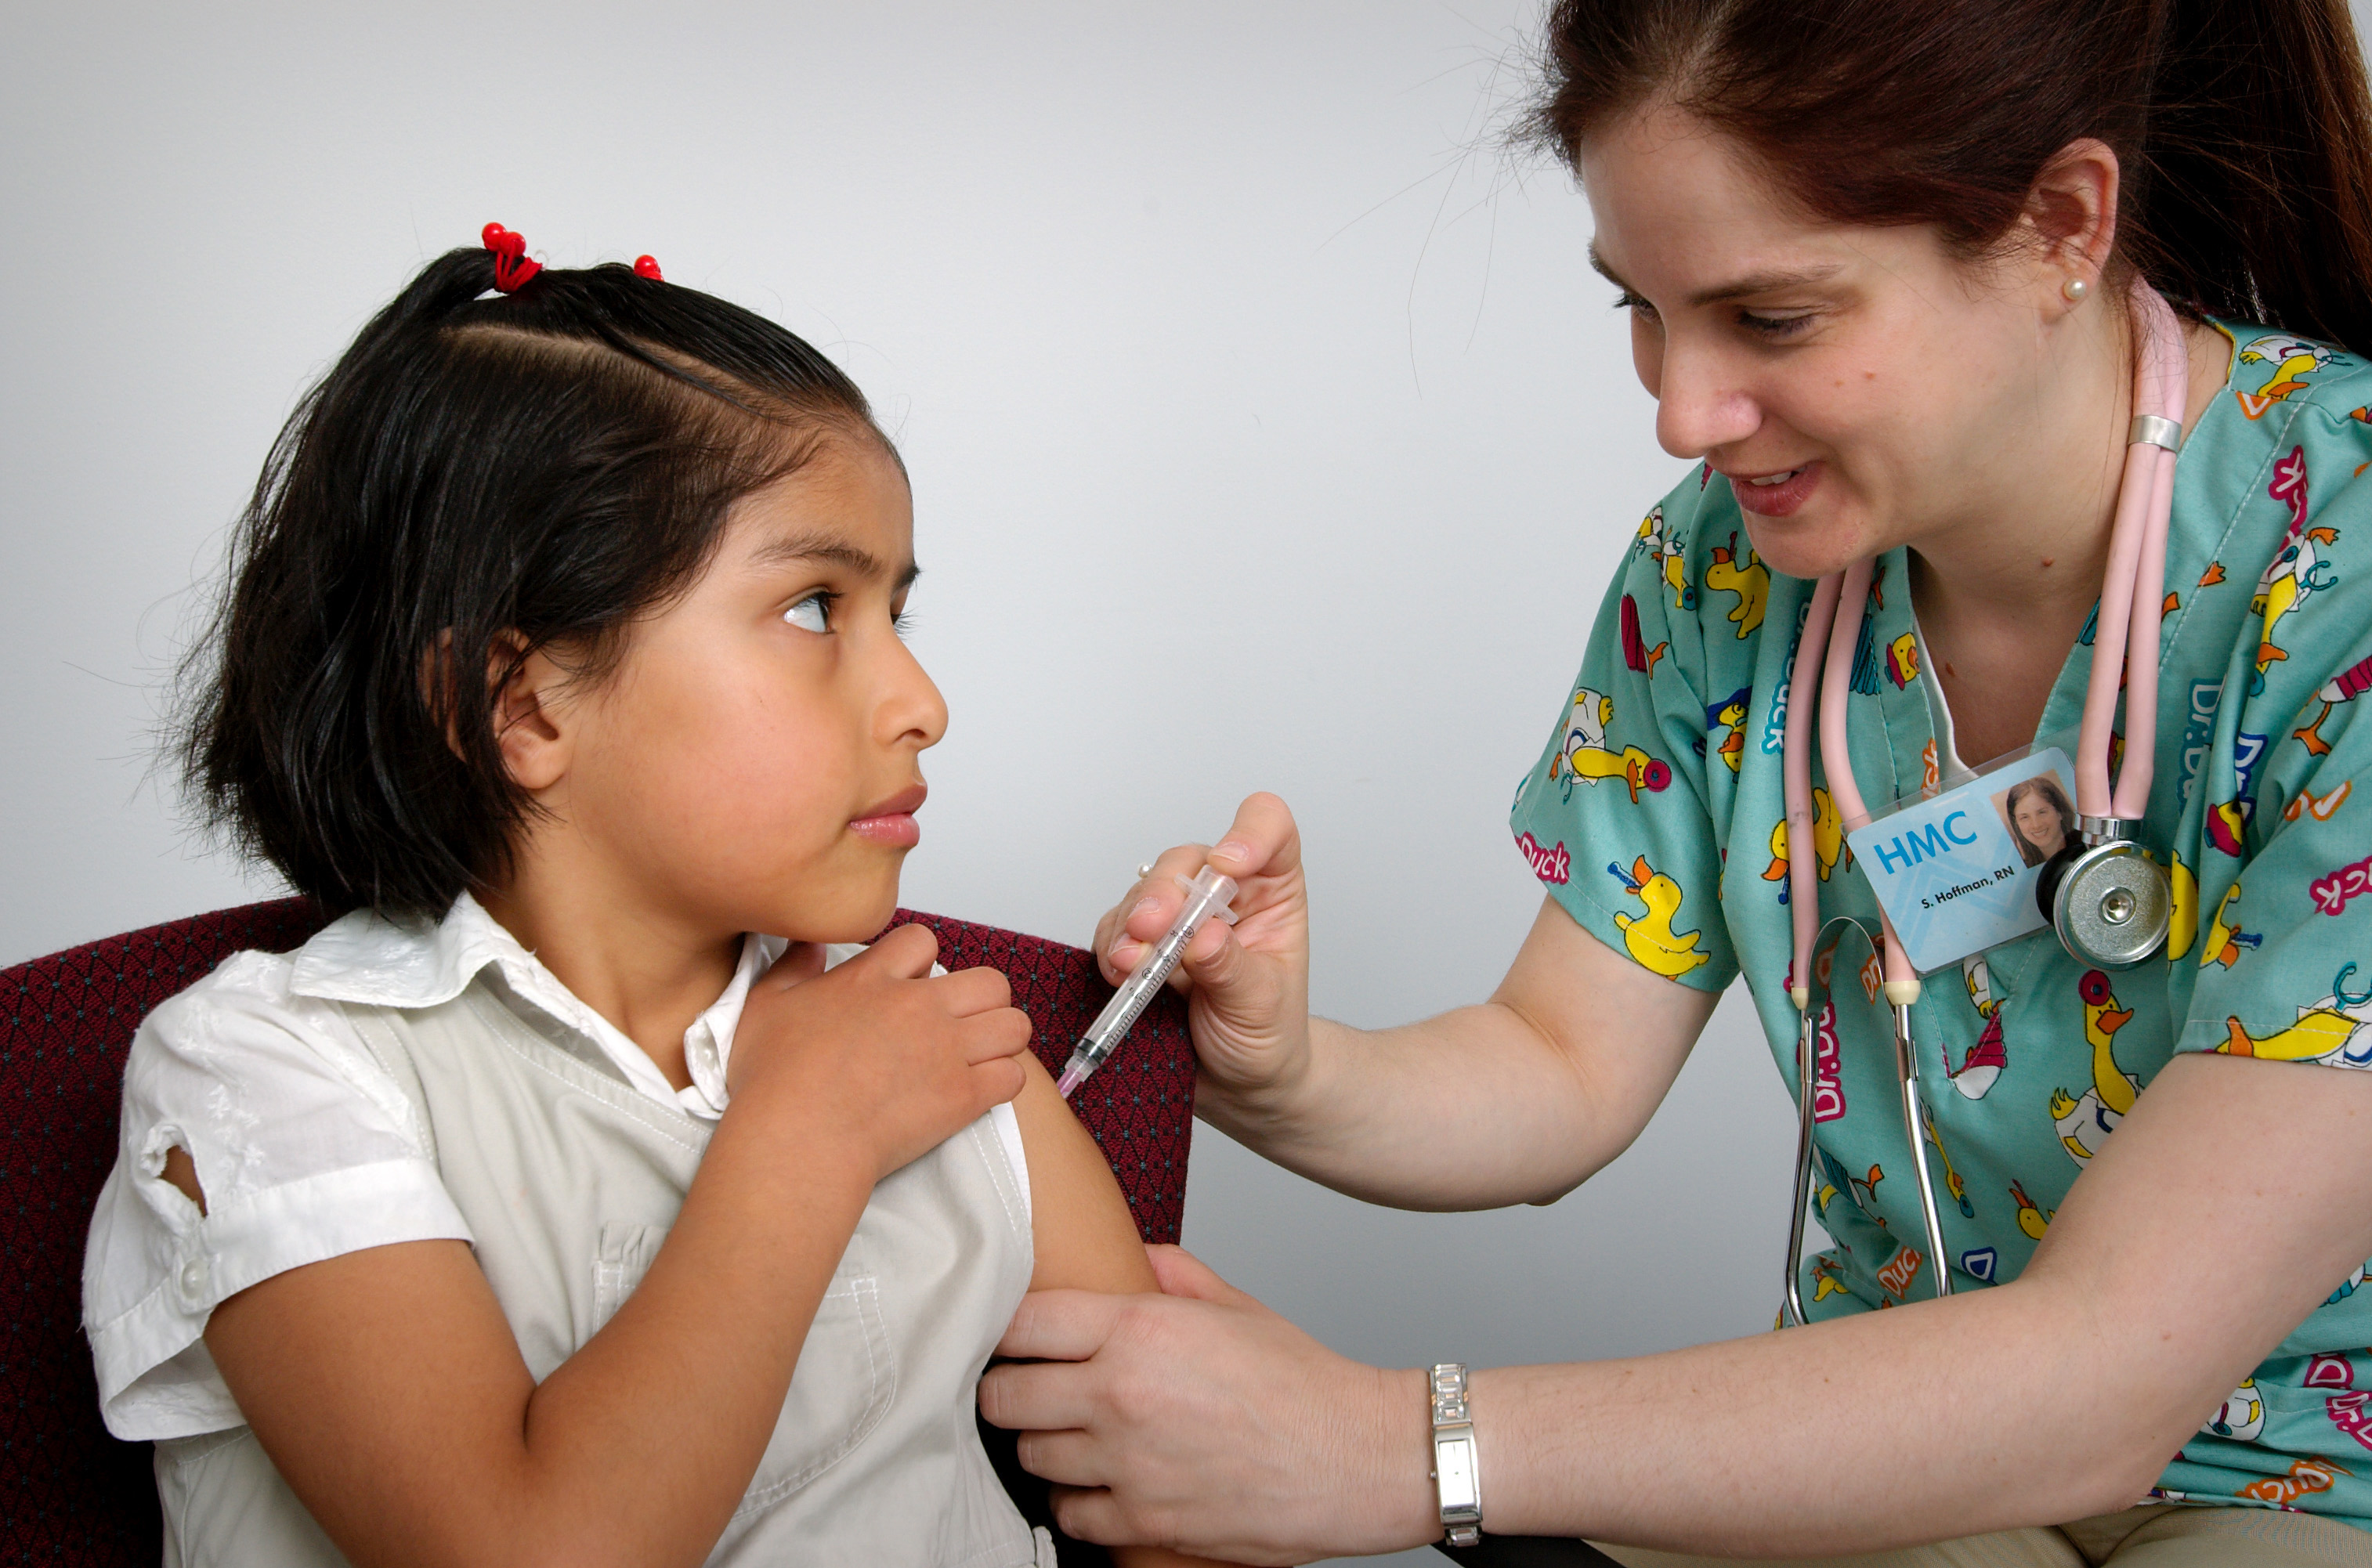 Image: Chickenpox vaccine found to cause shingles in some children